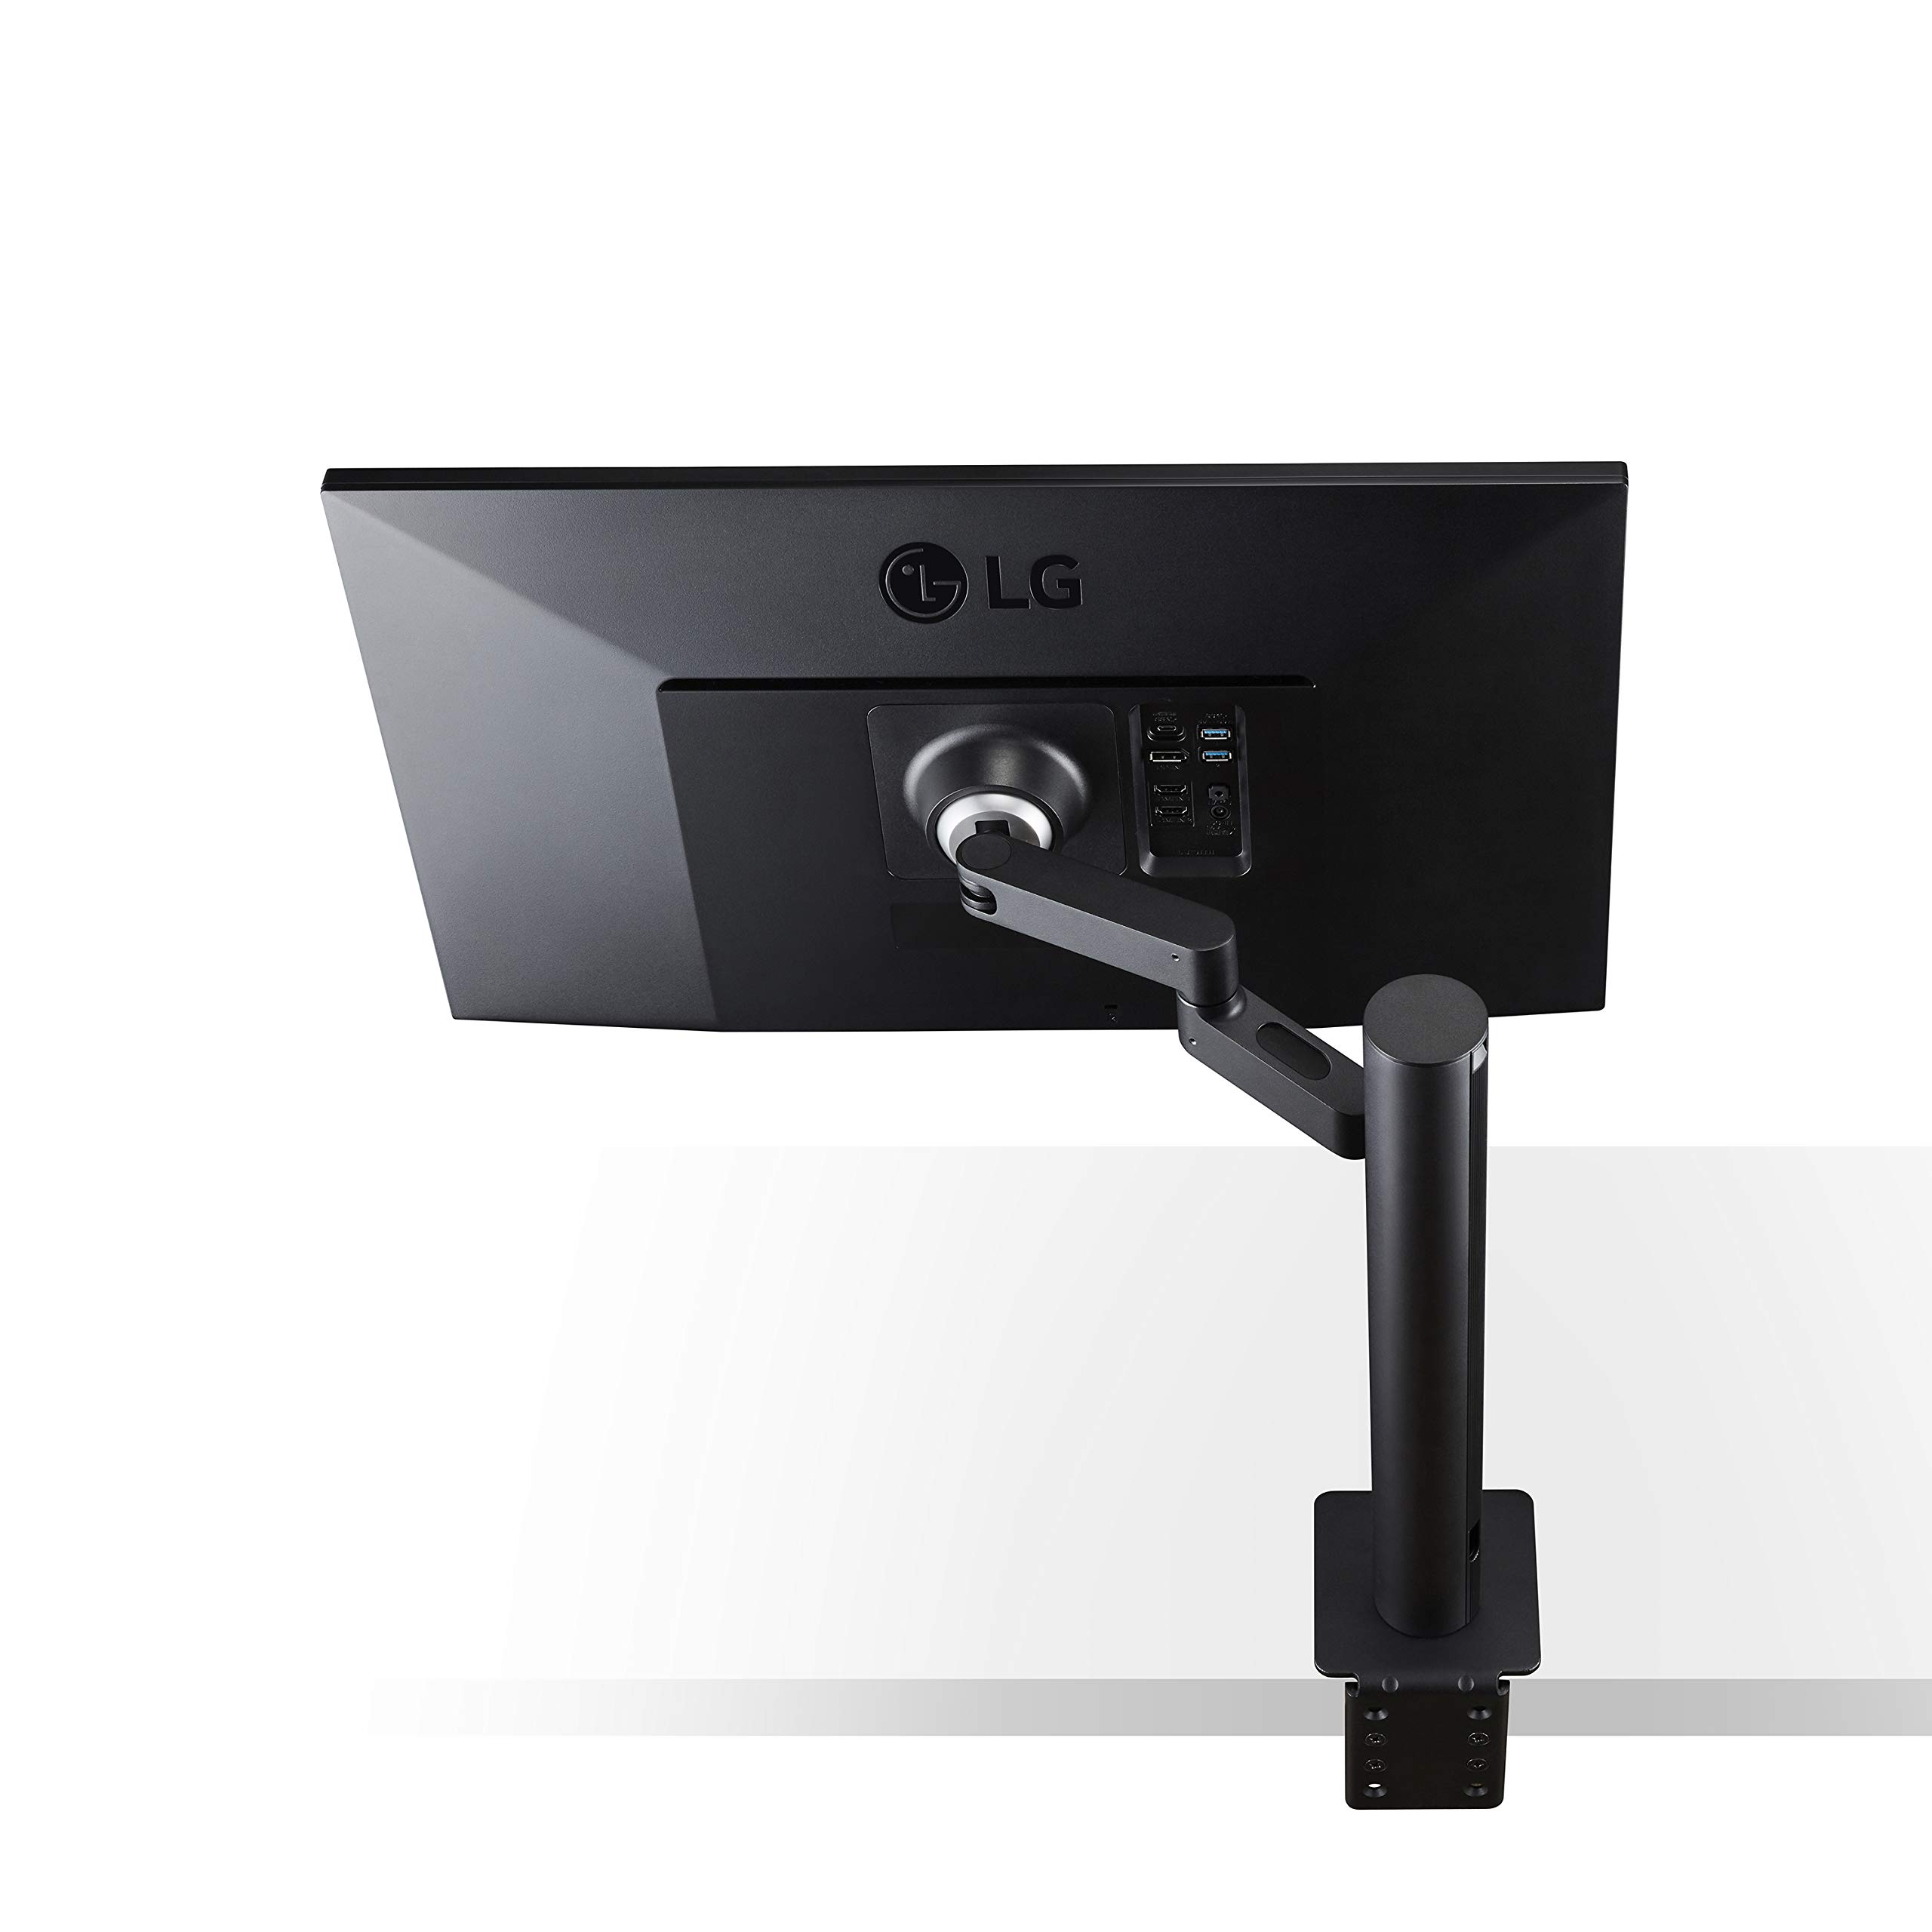 LG 27UN880-B Ultrafine Monitor 27” UHD (3840 x 2160) IPS Display, sRGB 99% Color Gamut, VESA DisplayHDR 400, USB Type-C, Ergo Stand - Black